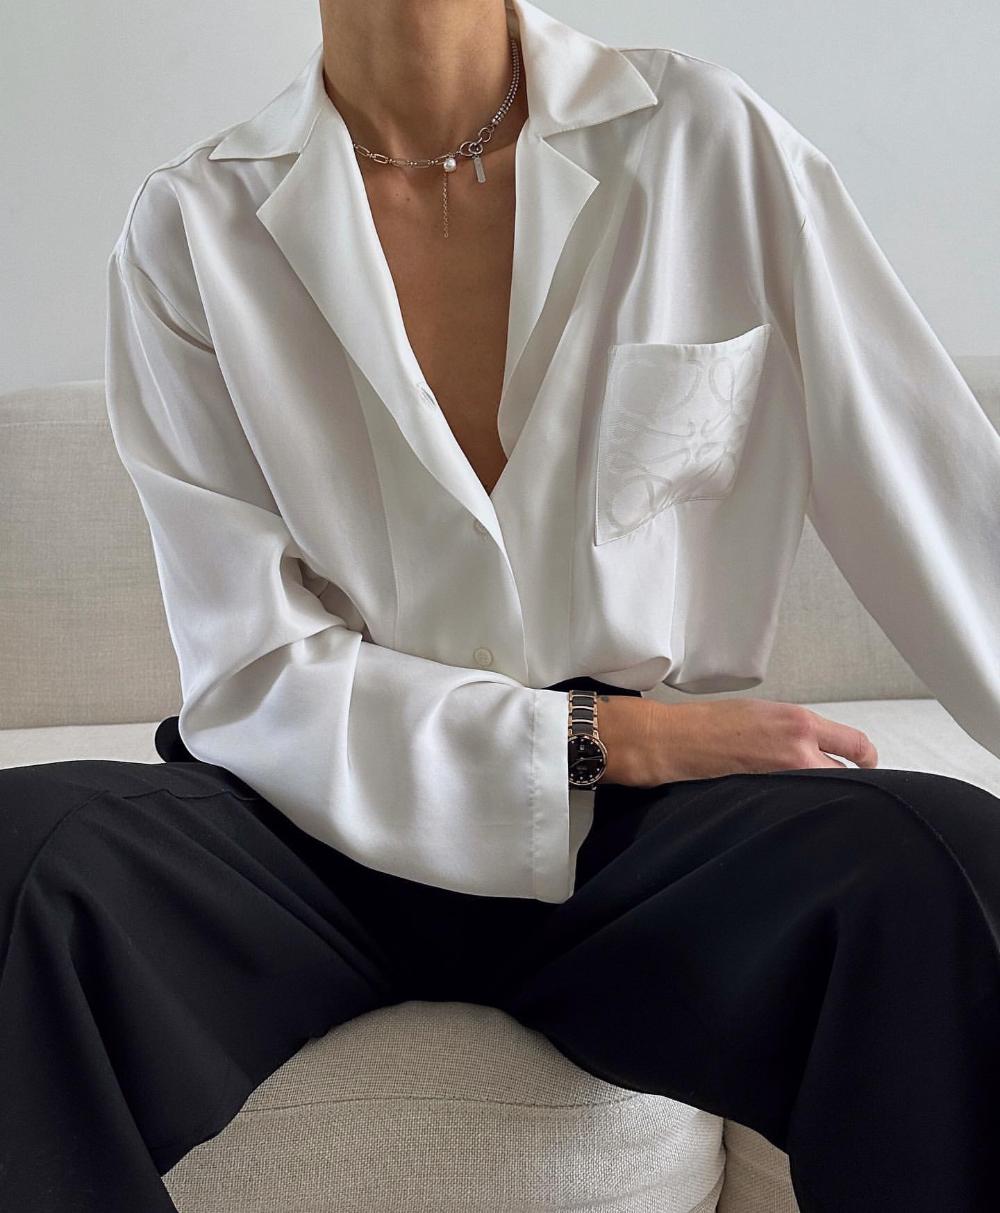 Petra Mackova Minimalist Outfits Loewe White Shirt, Black Pants Justine Clenquet necklace